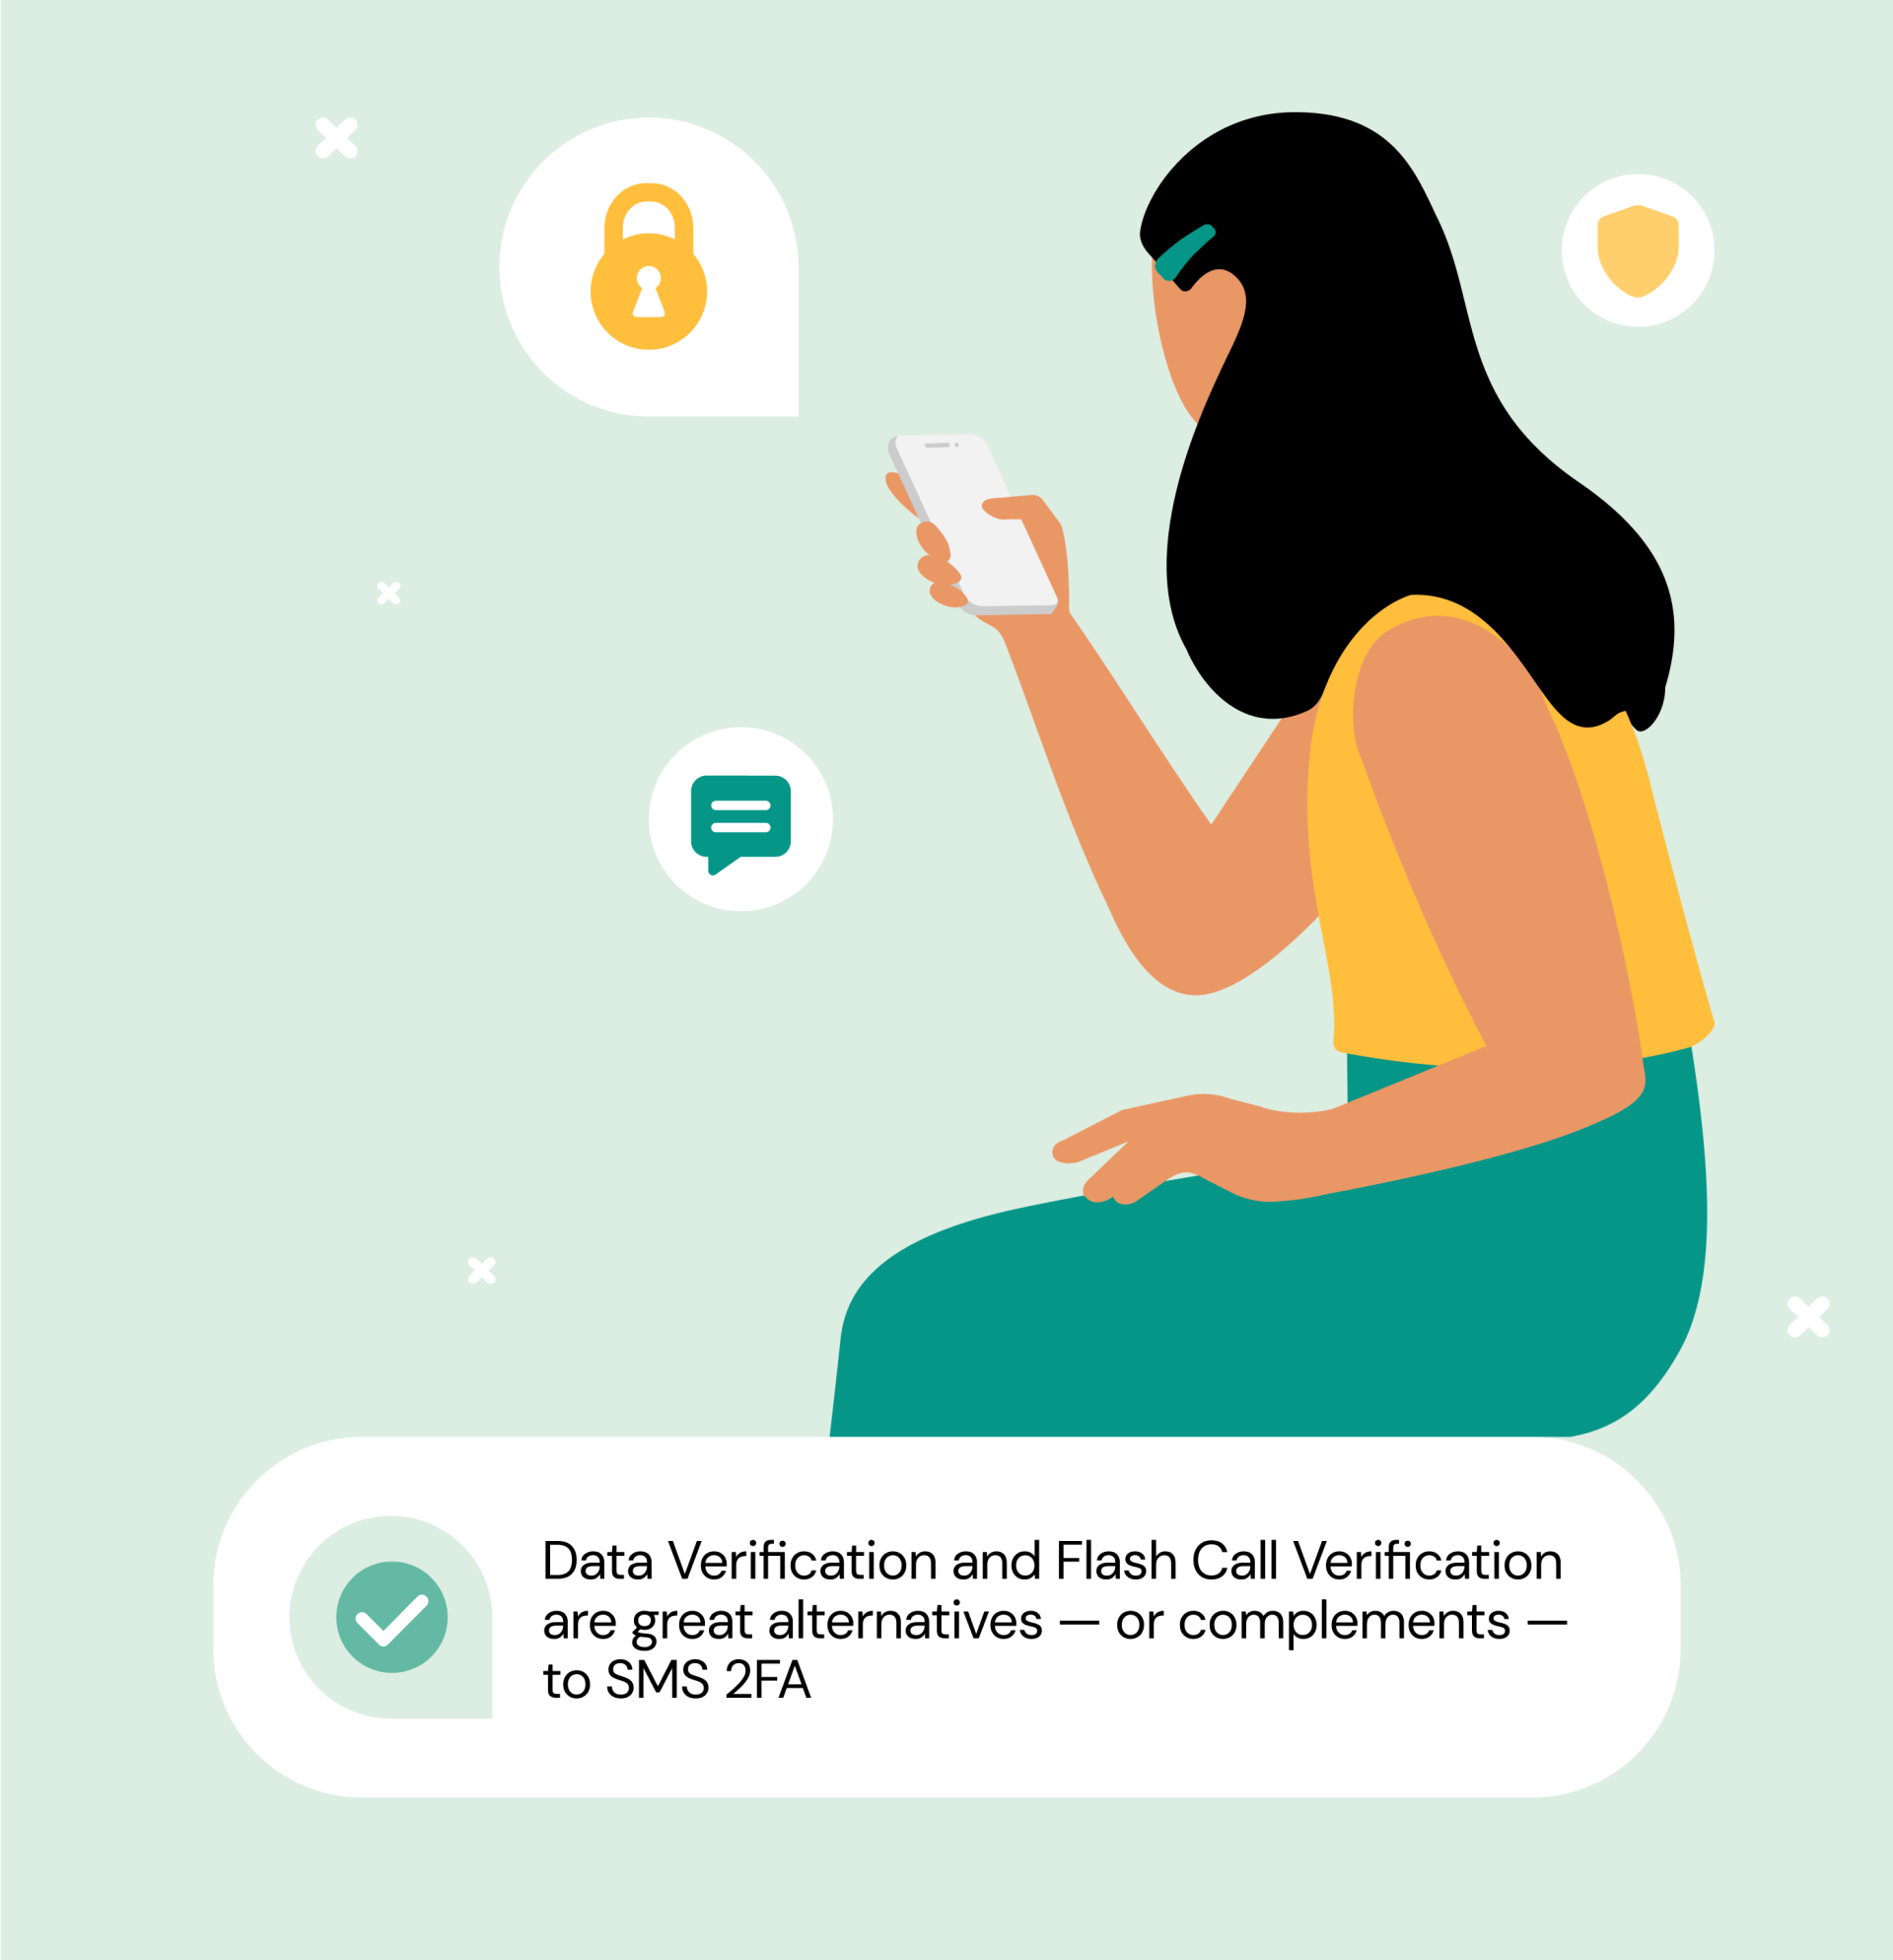 Banking customer verifying her identity using her mobile phone